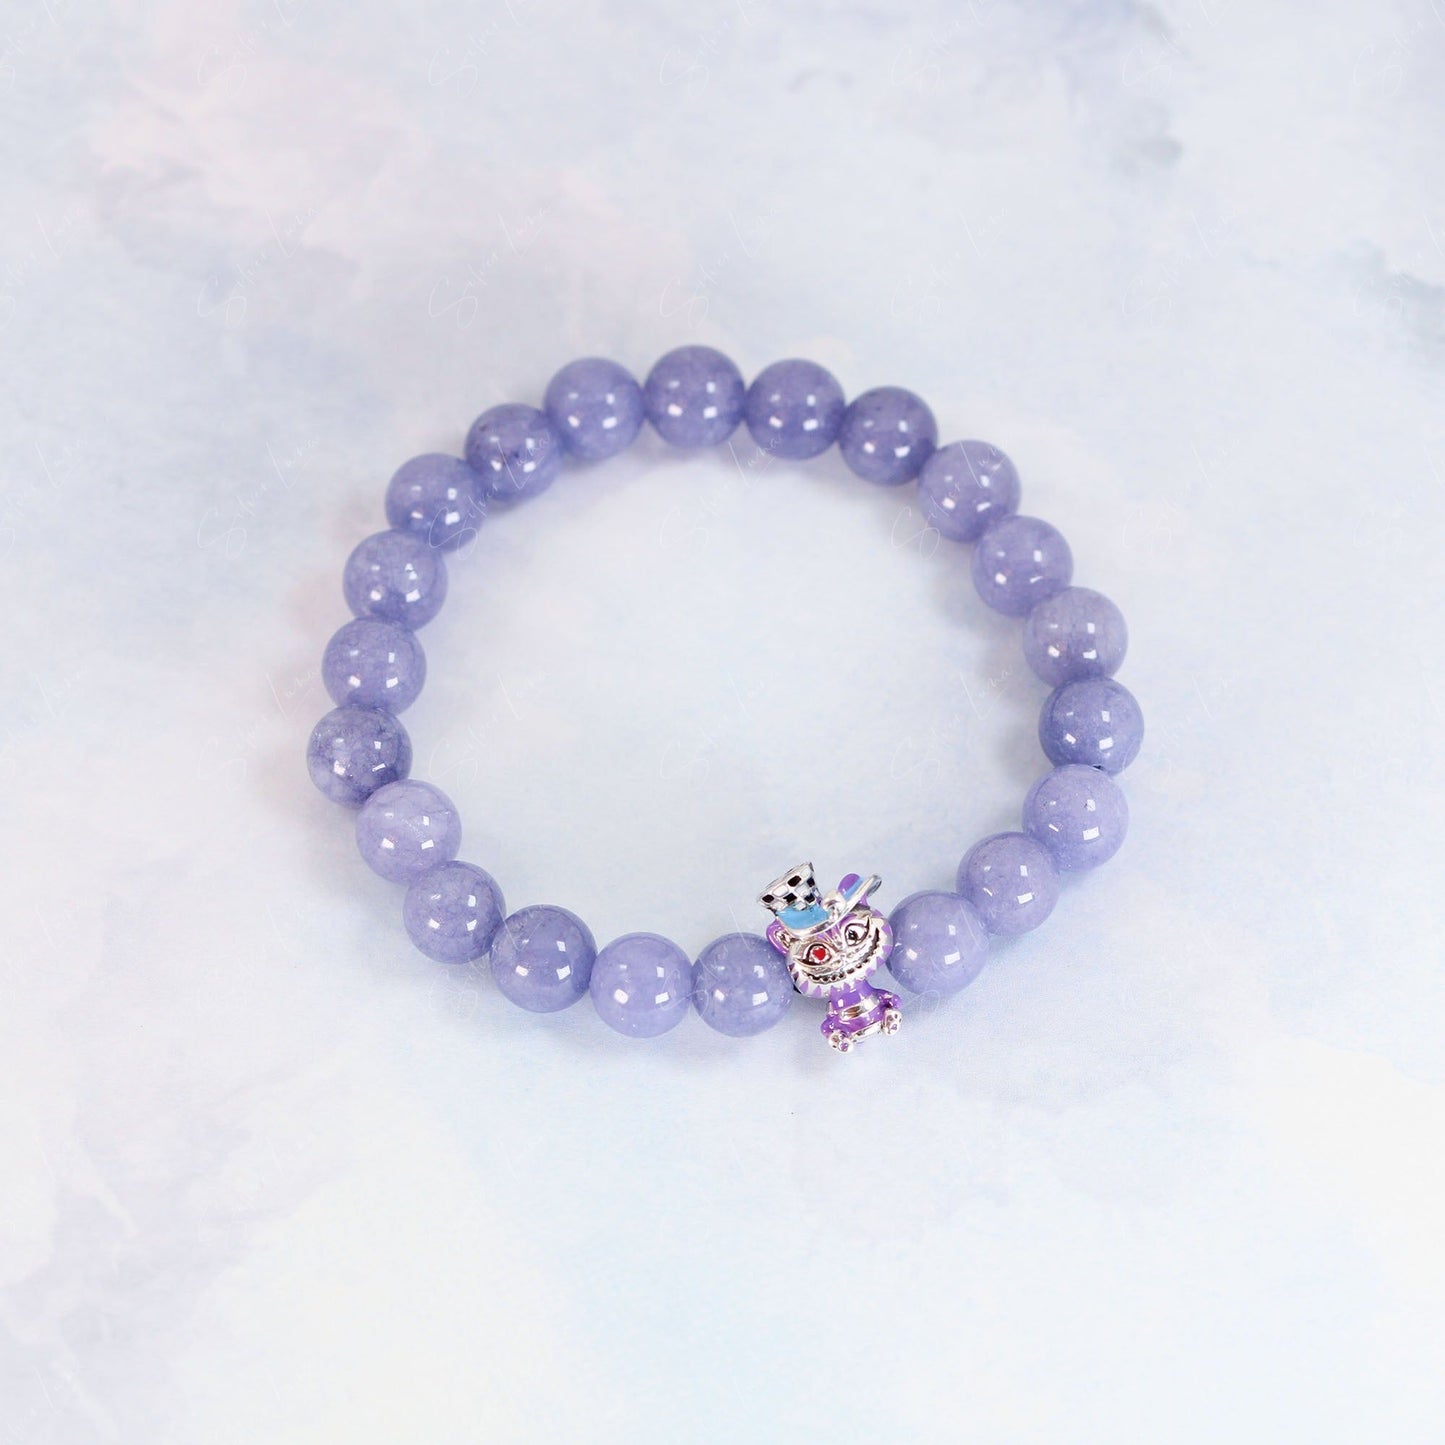 Blue Angelite beaded bracelet with Cherish cat bead charm